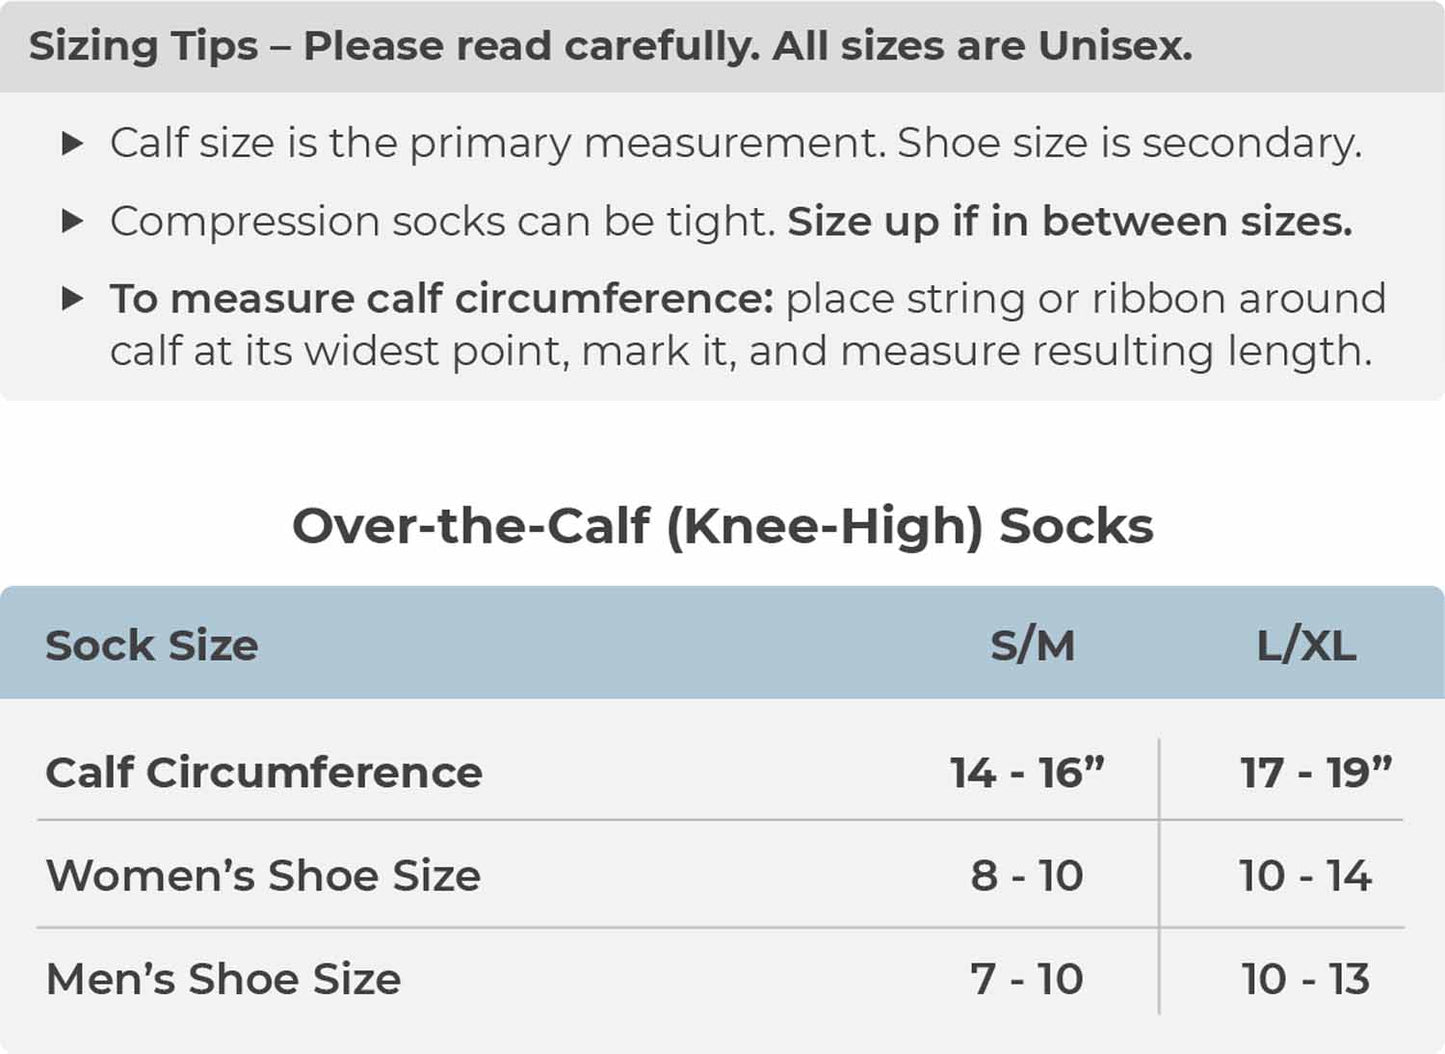 Los Angeles Chargers NFL Adult Compression Socks - Light Blue